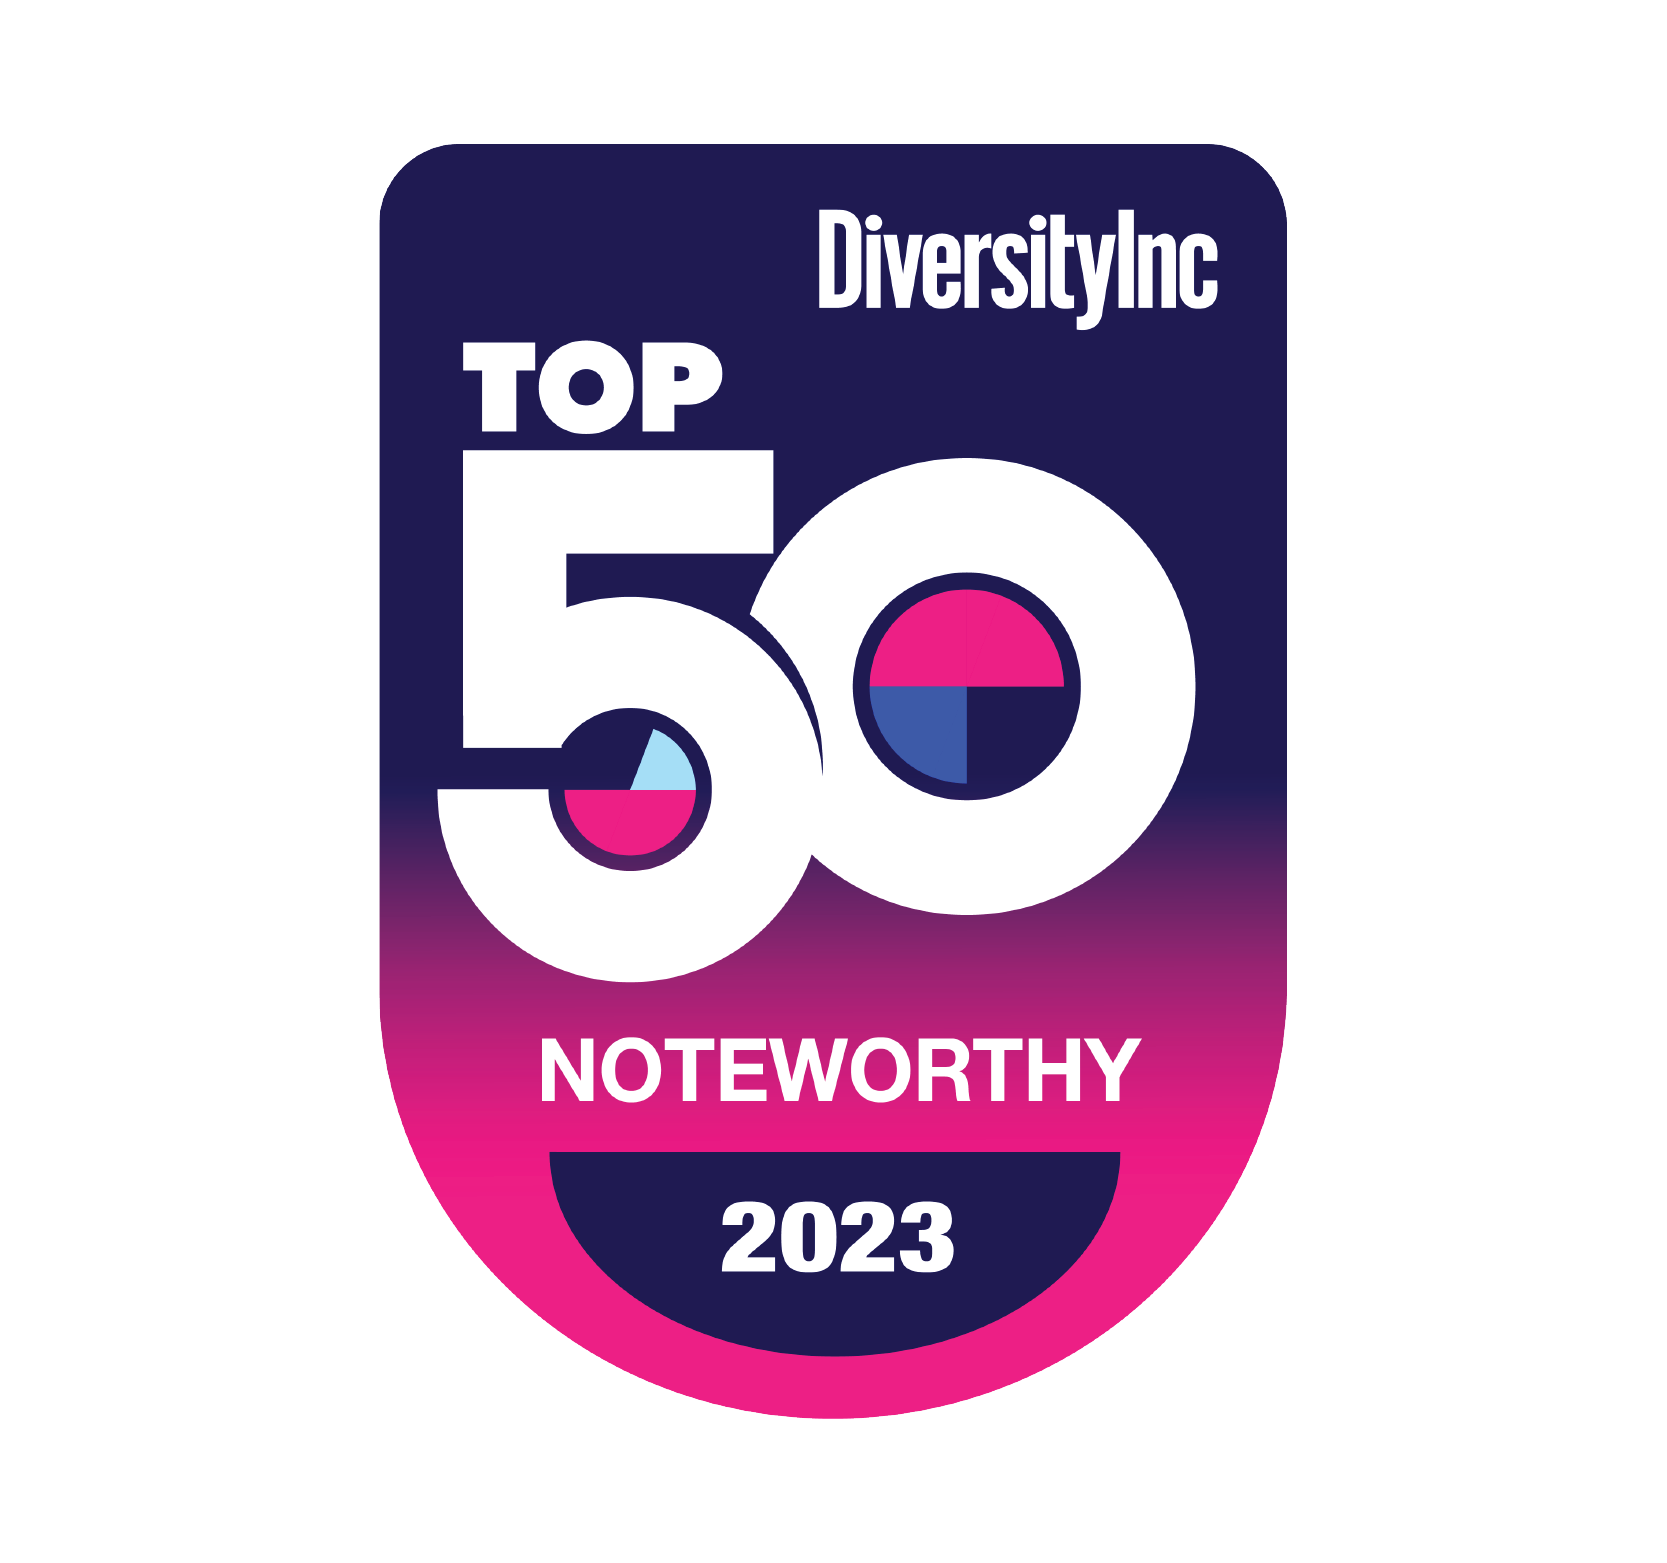 2023 DiversityInc Top 50 Noteworthy pink and purple award logo